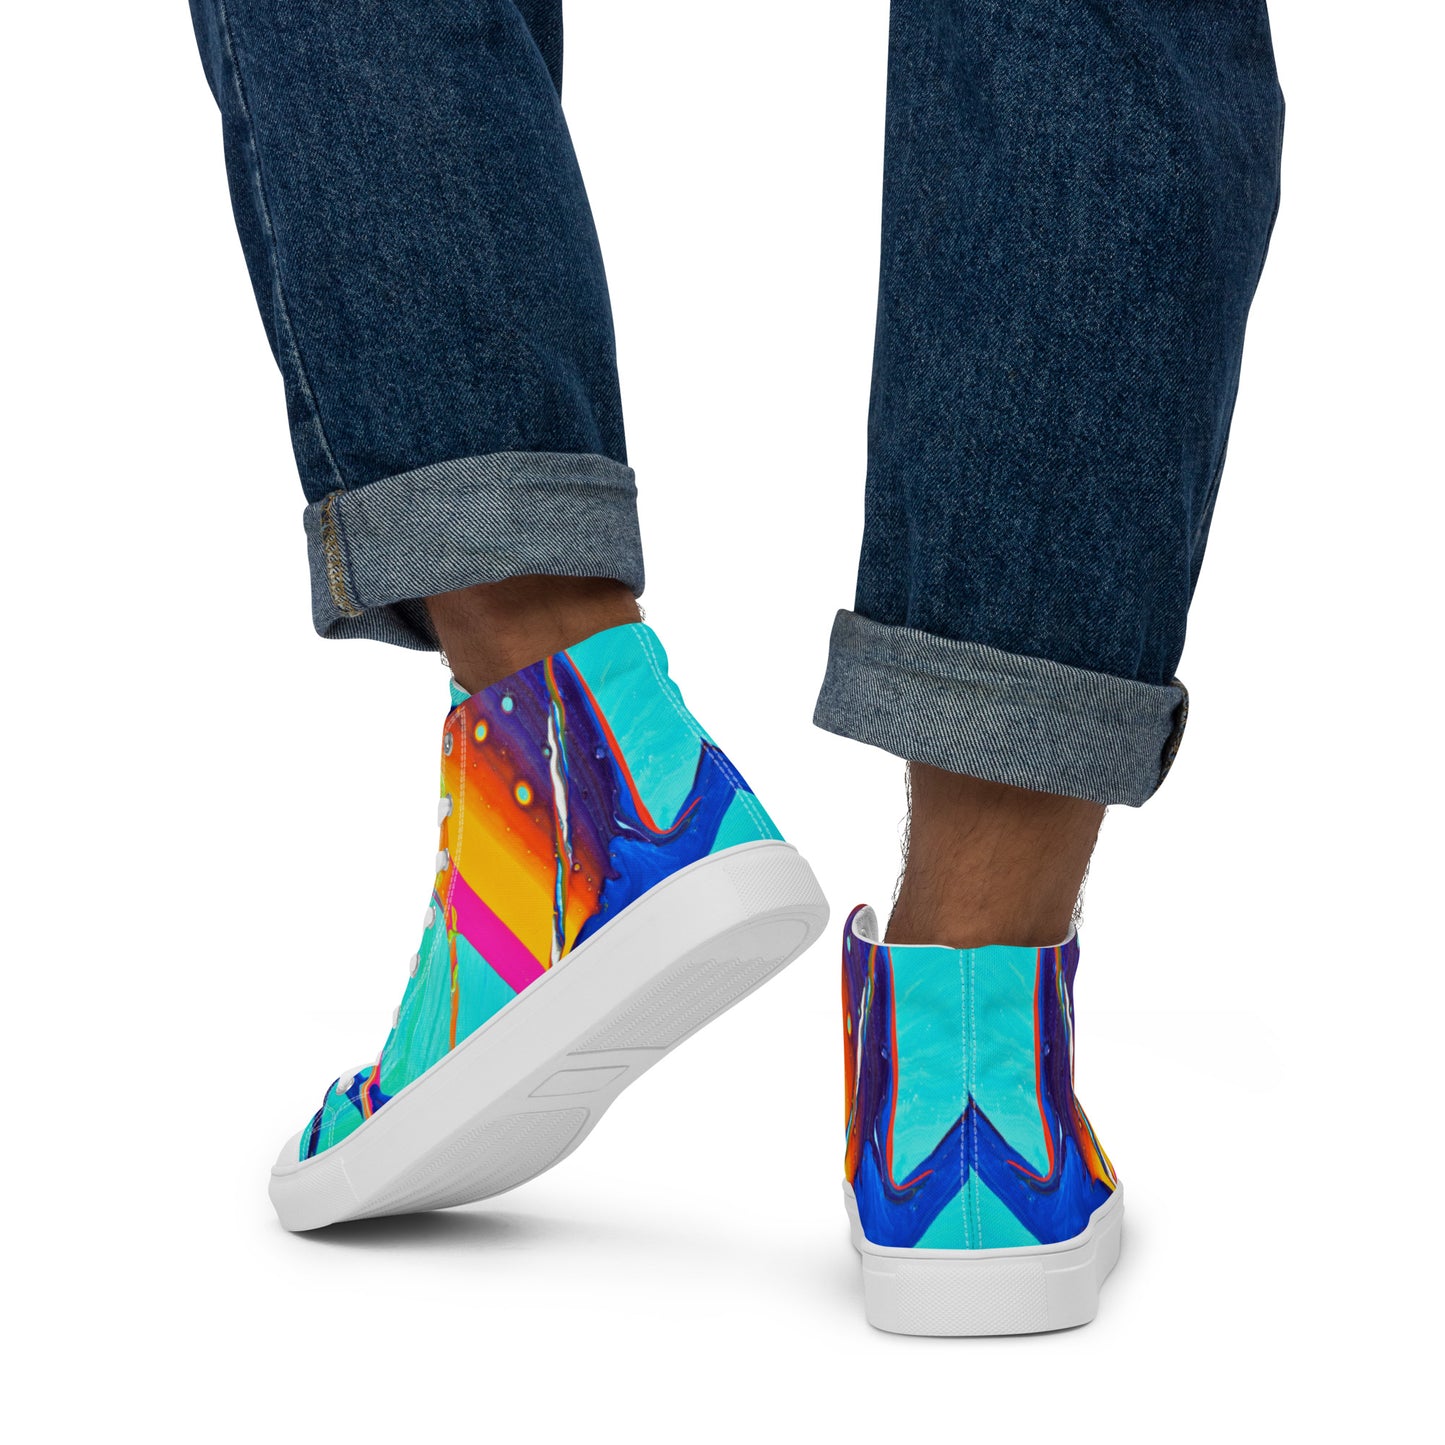 Sapatos cano alto de lona masculinos - design Rainbow